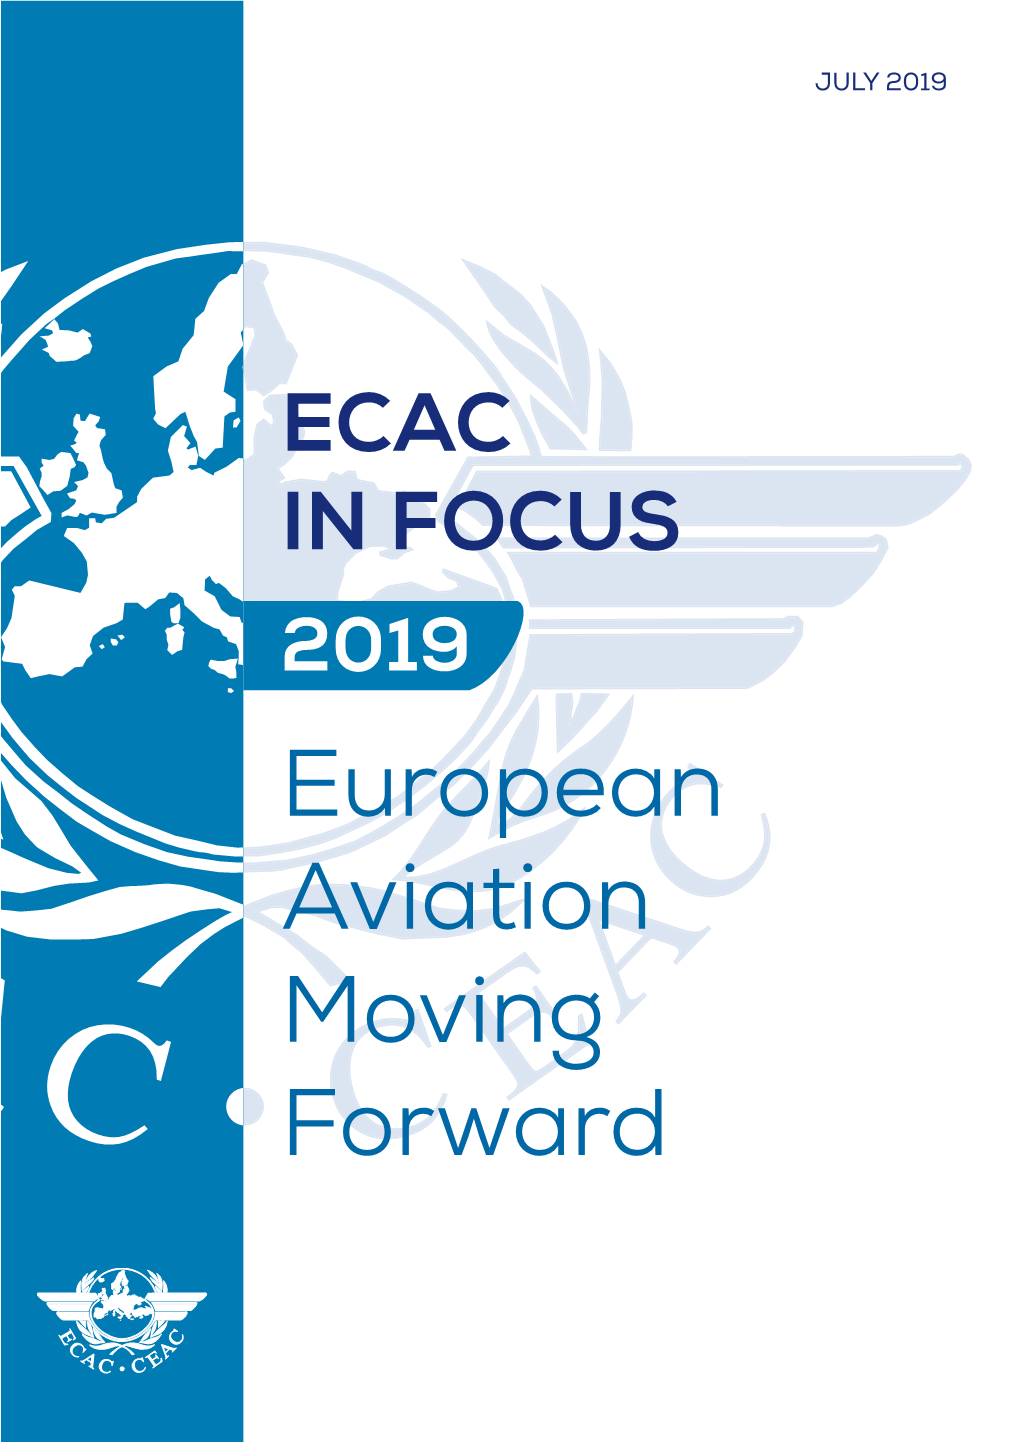 ECAC in FOCUS 2019 European Aviation Moving Forward